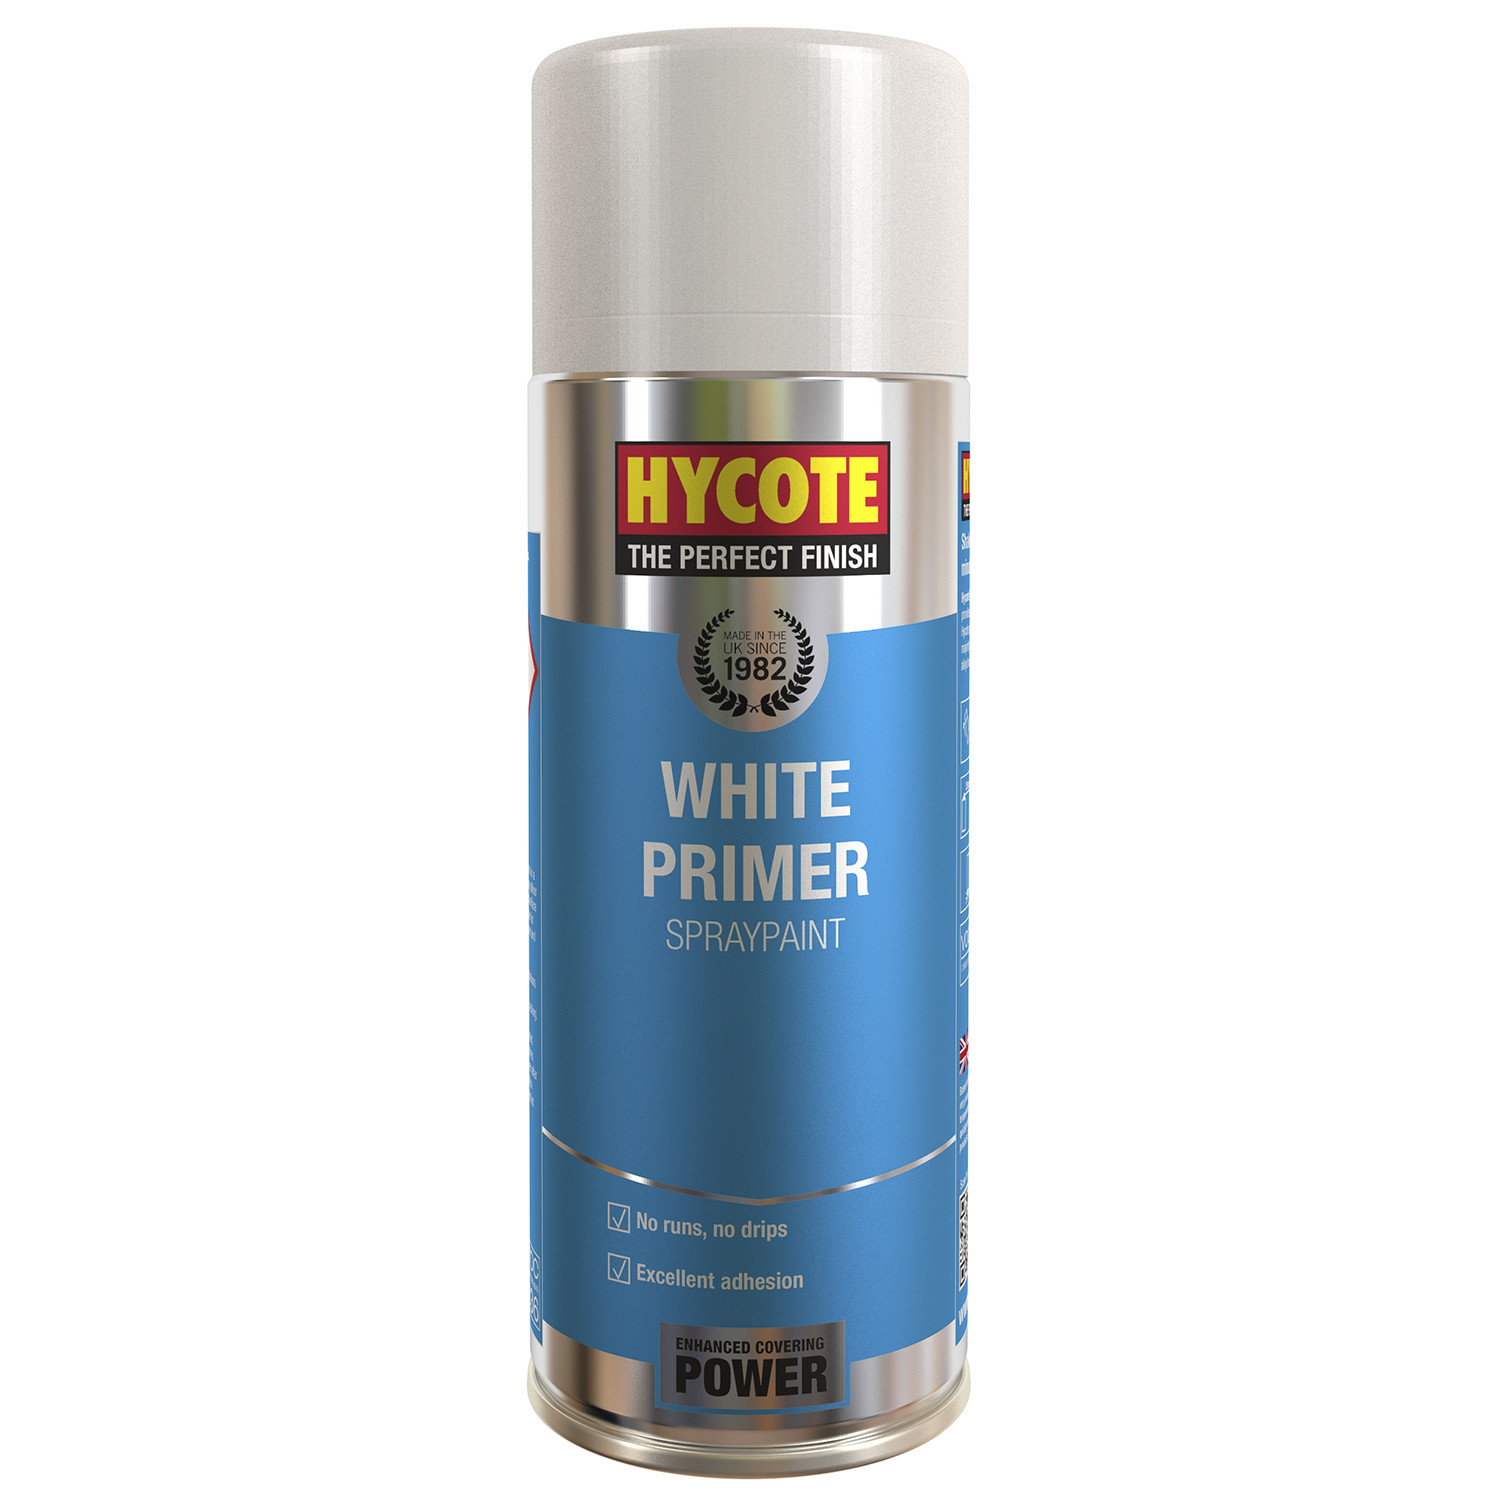 Hycote Primer Spraypaint 400ml - White Image